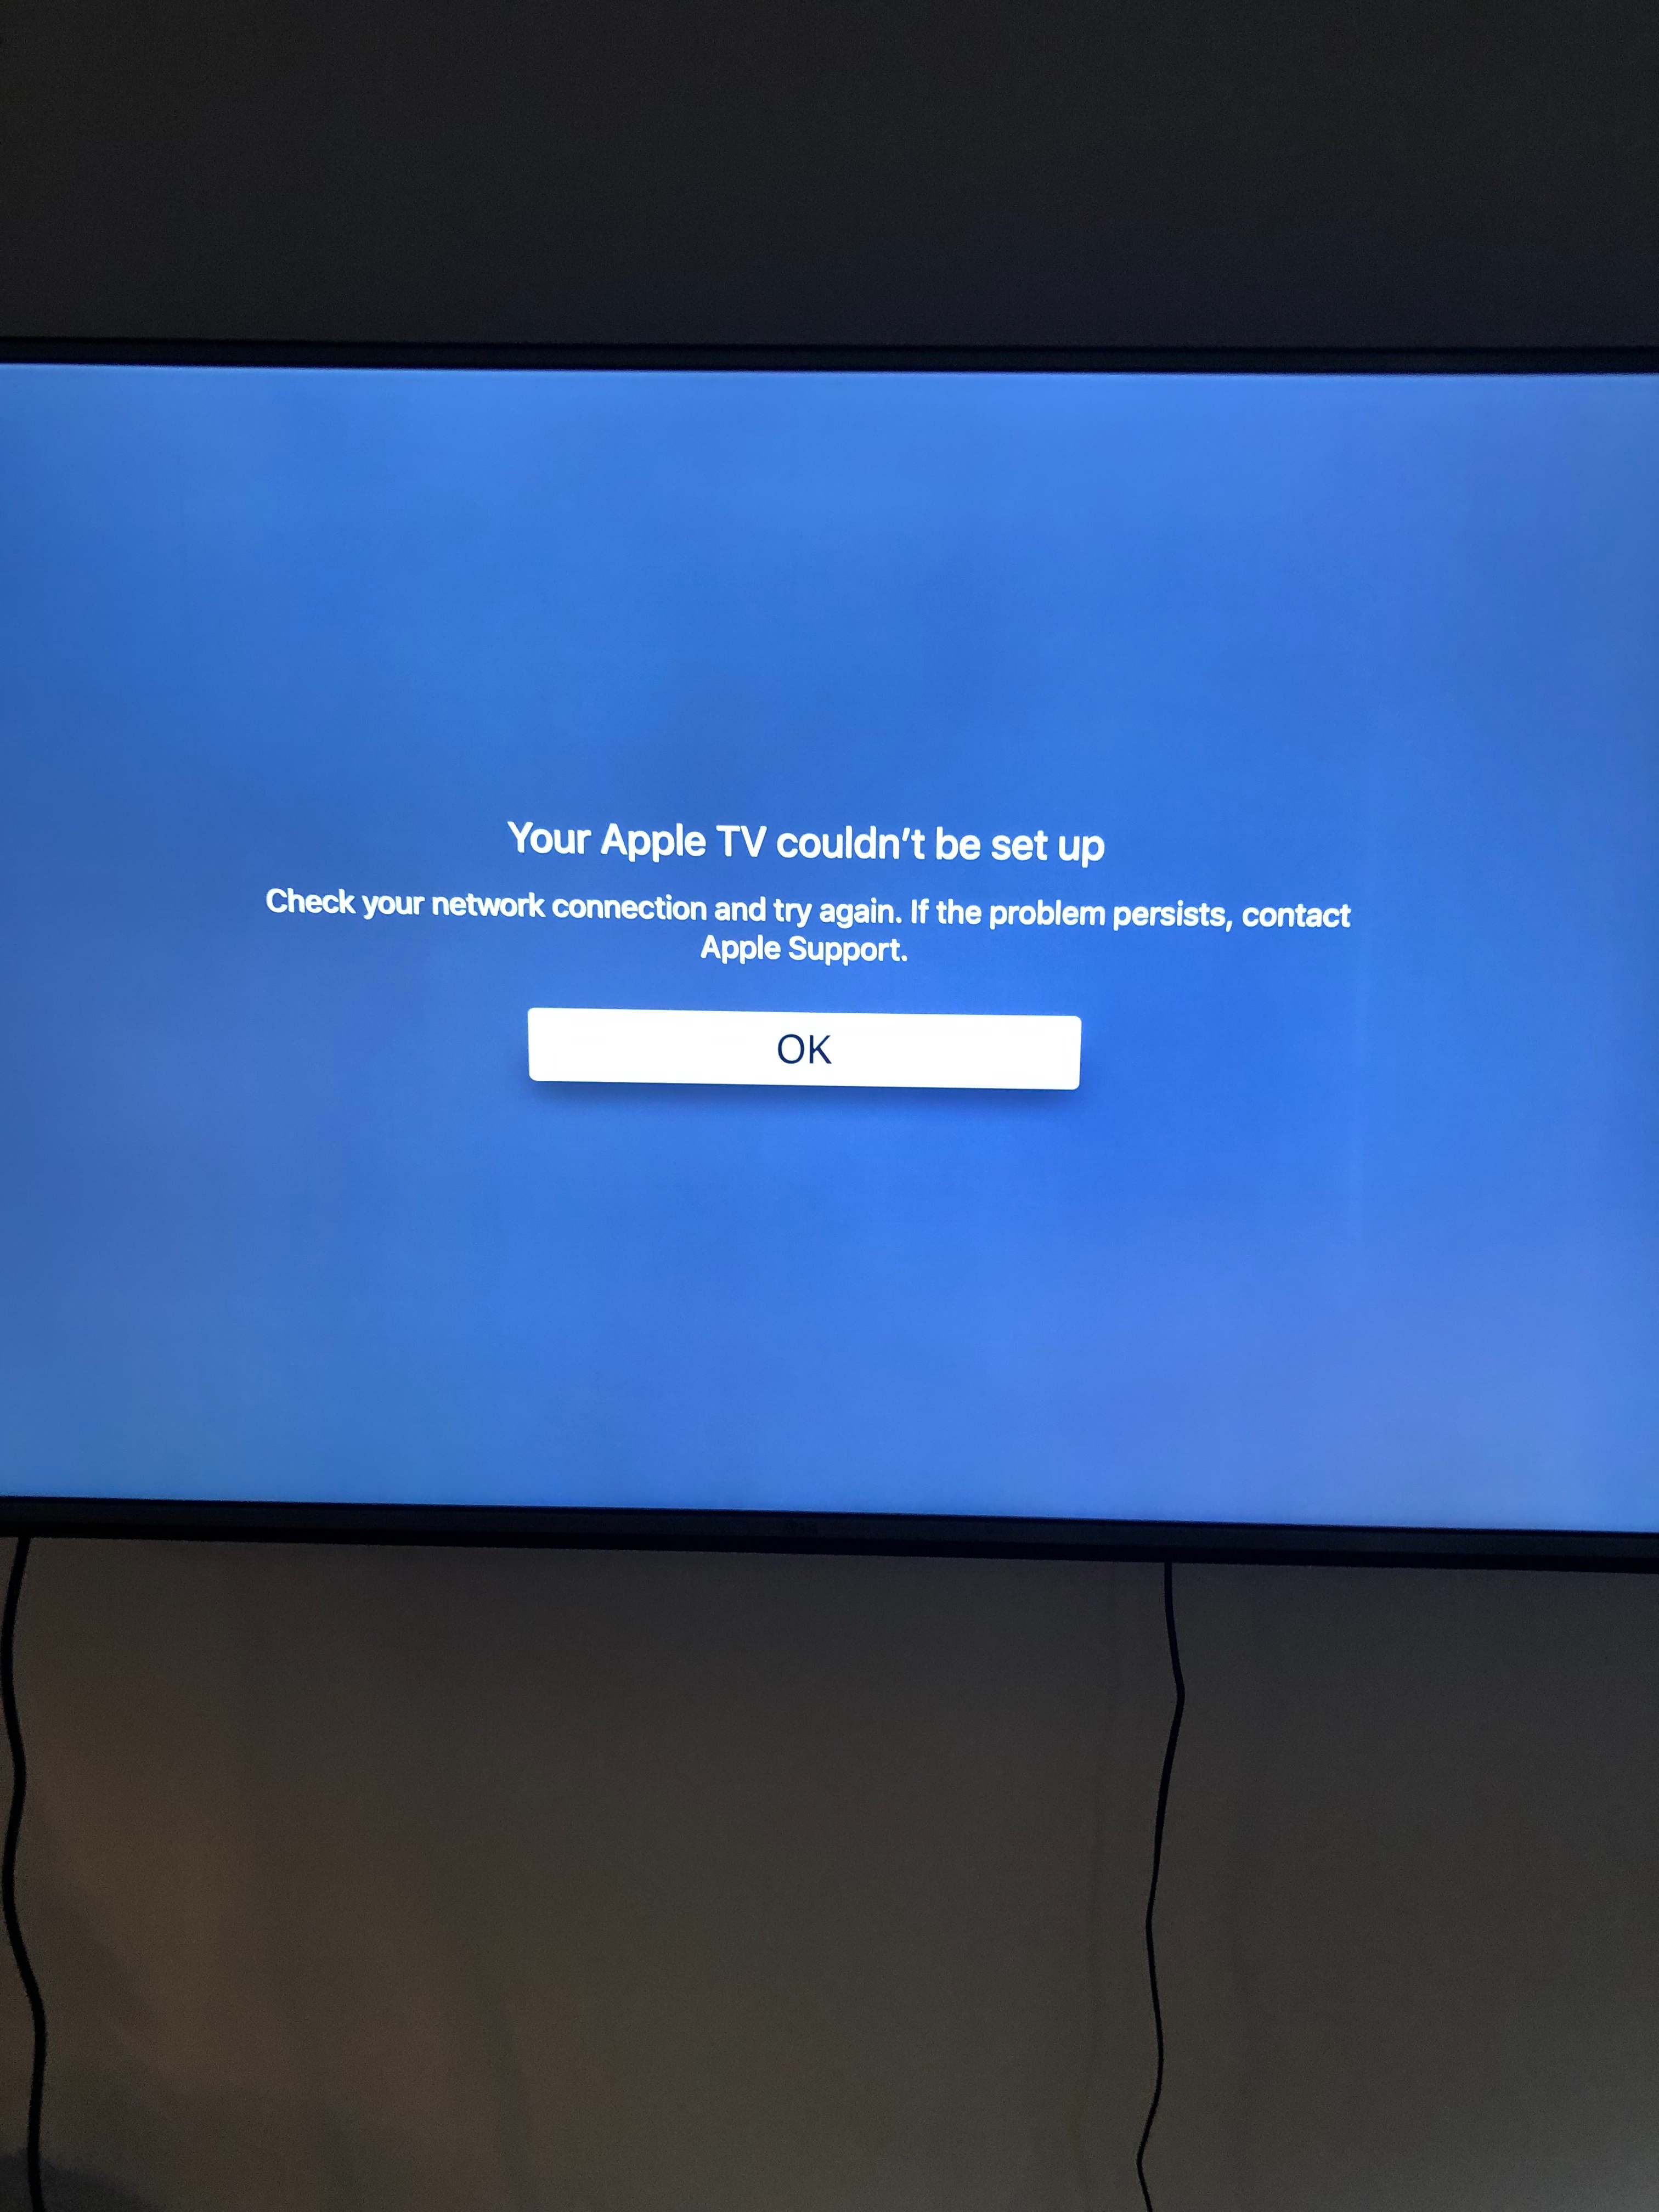 døråbning Bærecirkel mirakel Unable to connect Apple TV to wifi network - Apple Community